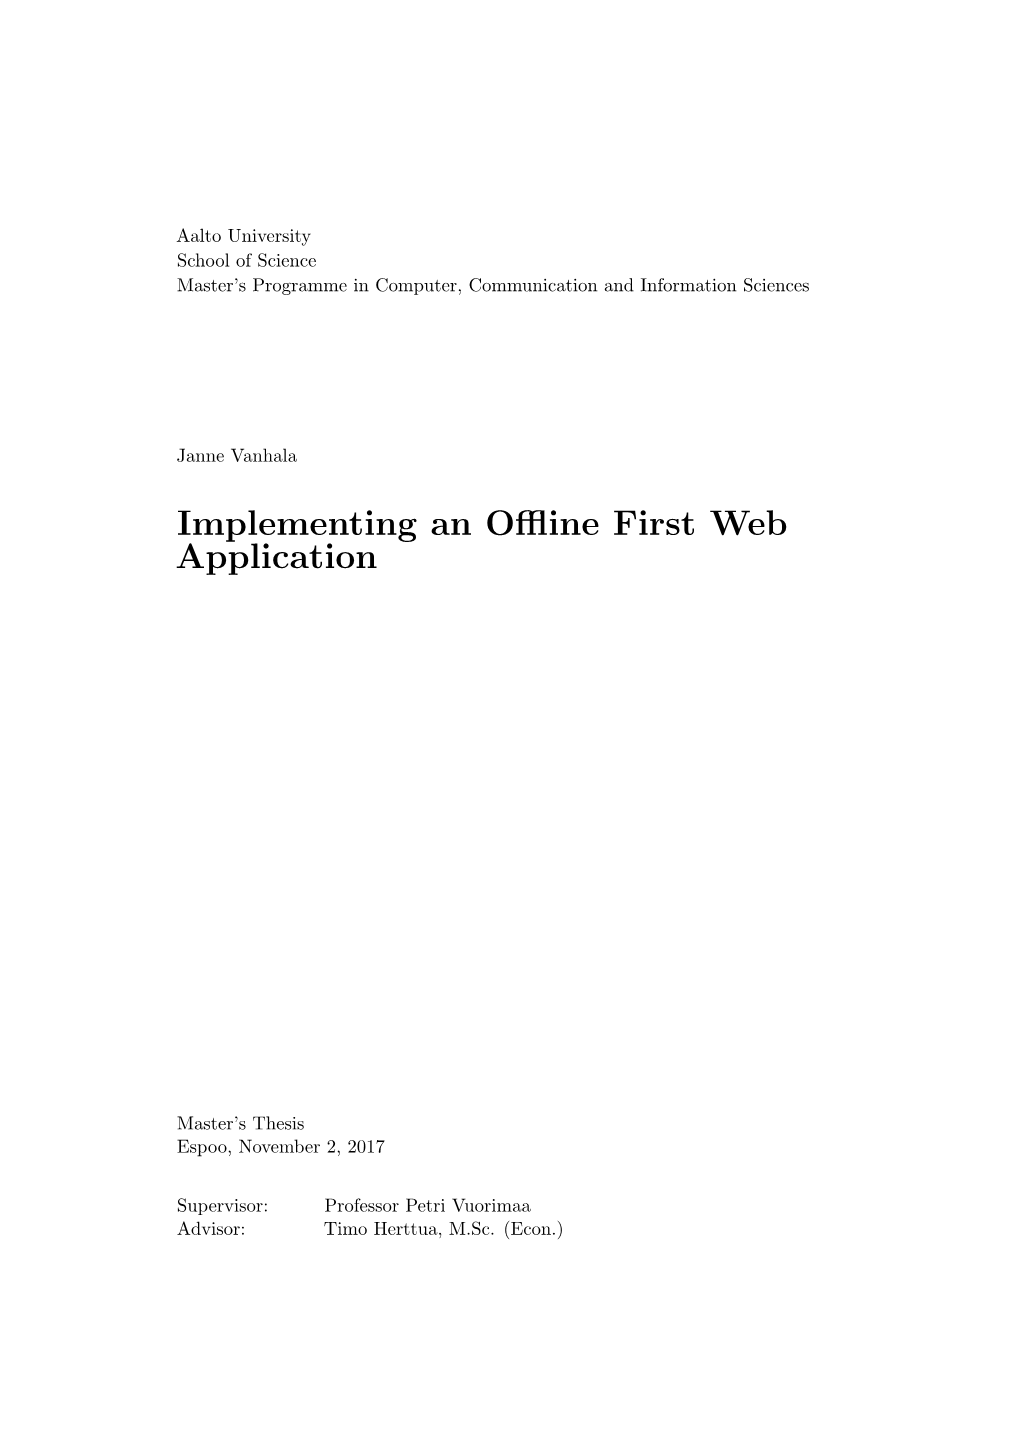 Implementing an Offline First Web Application